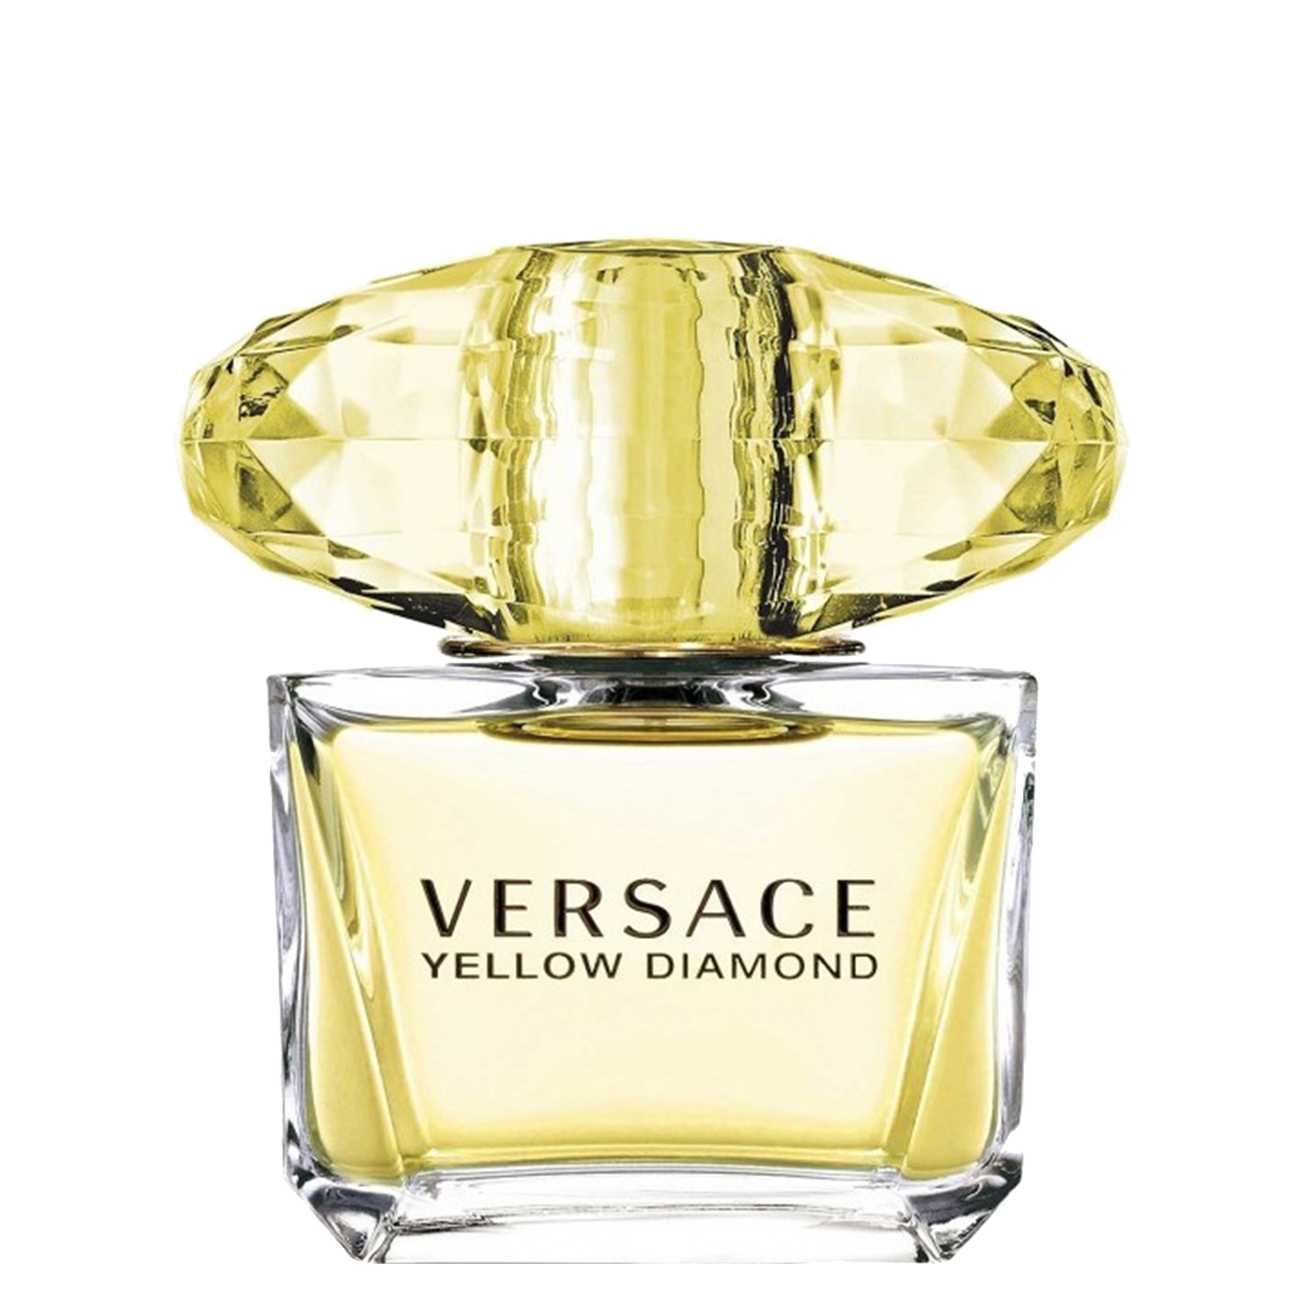 Apa de Toaleta Versace YELLOW DIAMOND 90ml cu comanda online